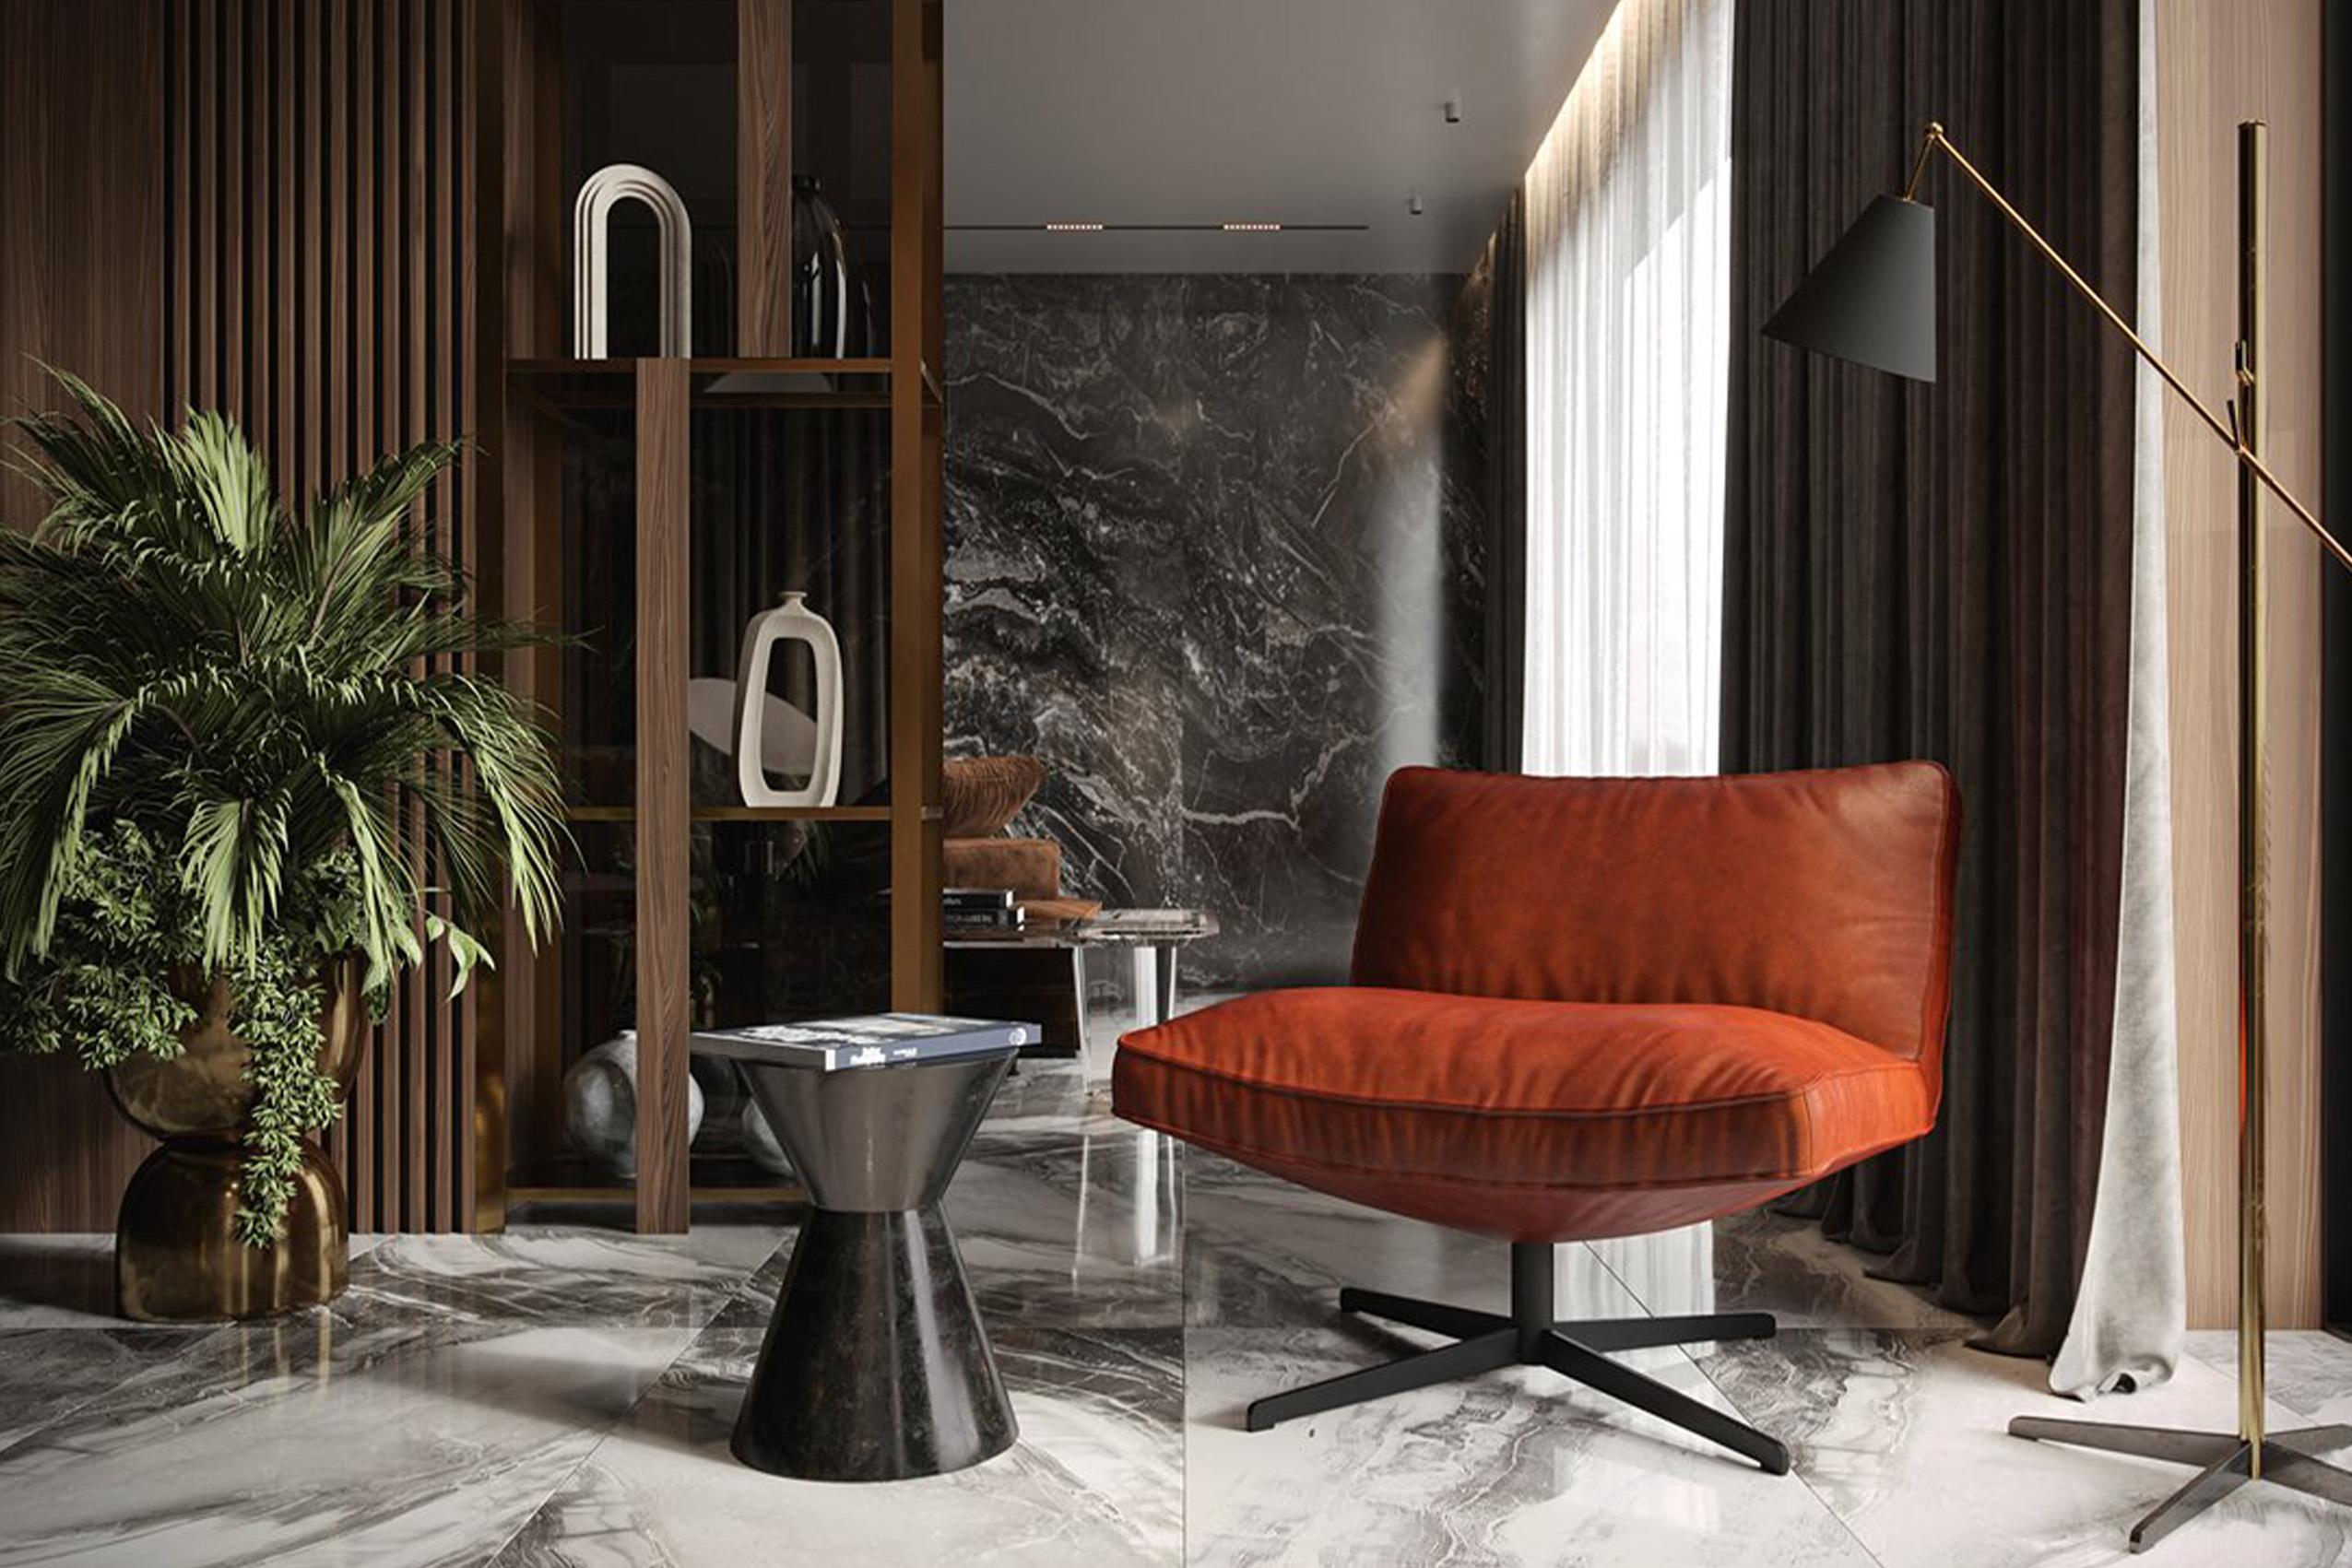 

    
Cognac Top Grain Leather Swivel Chair 598 Grusin Moroni Contemporary Modern
